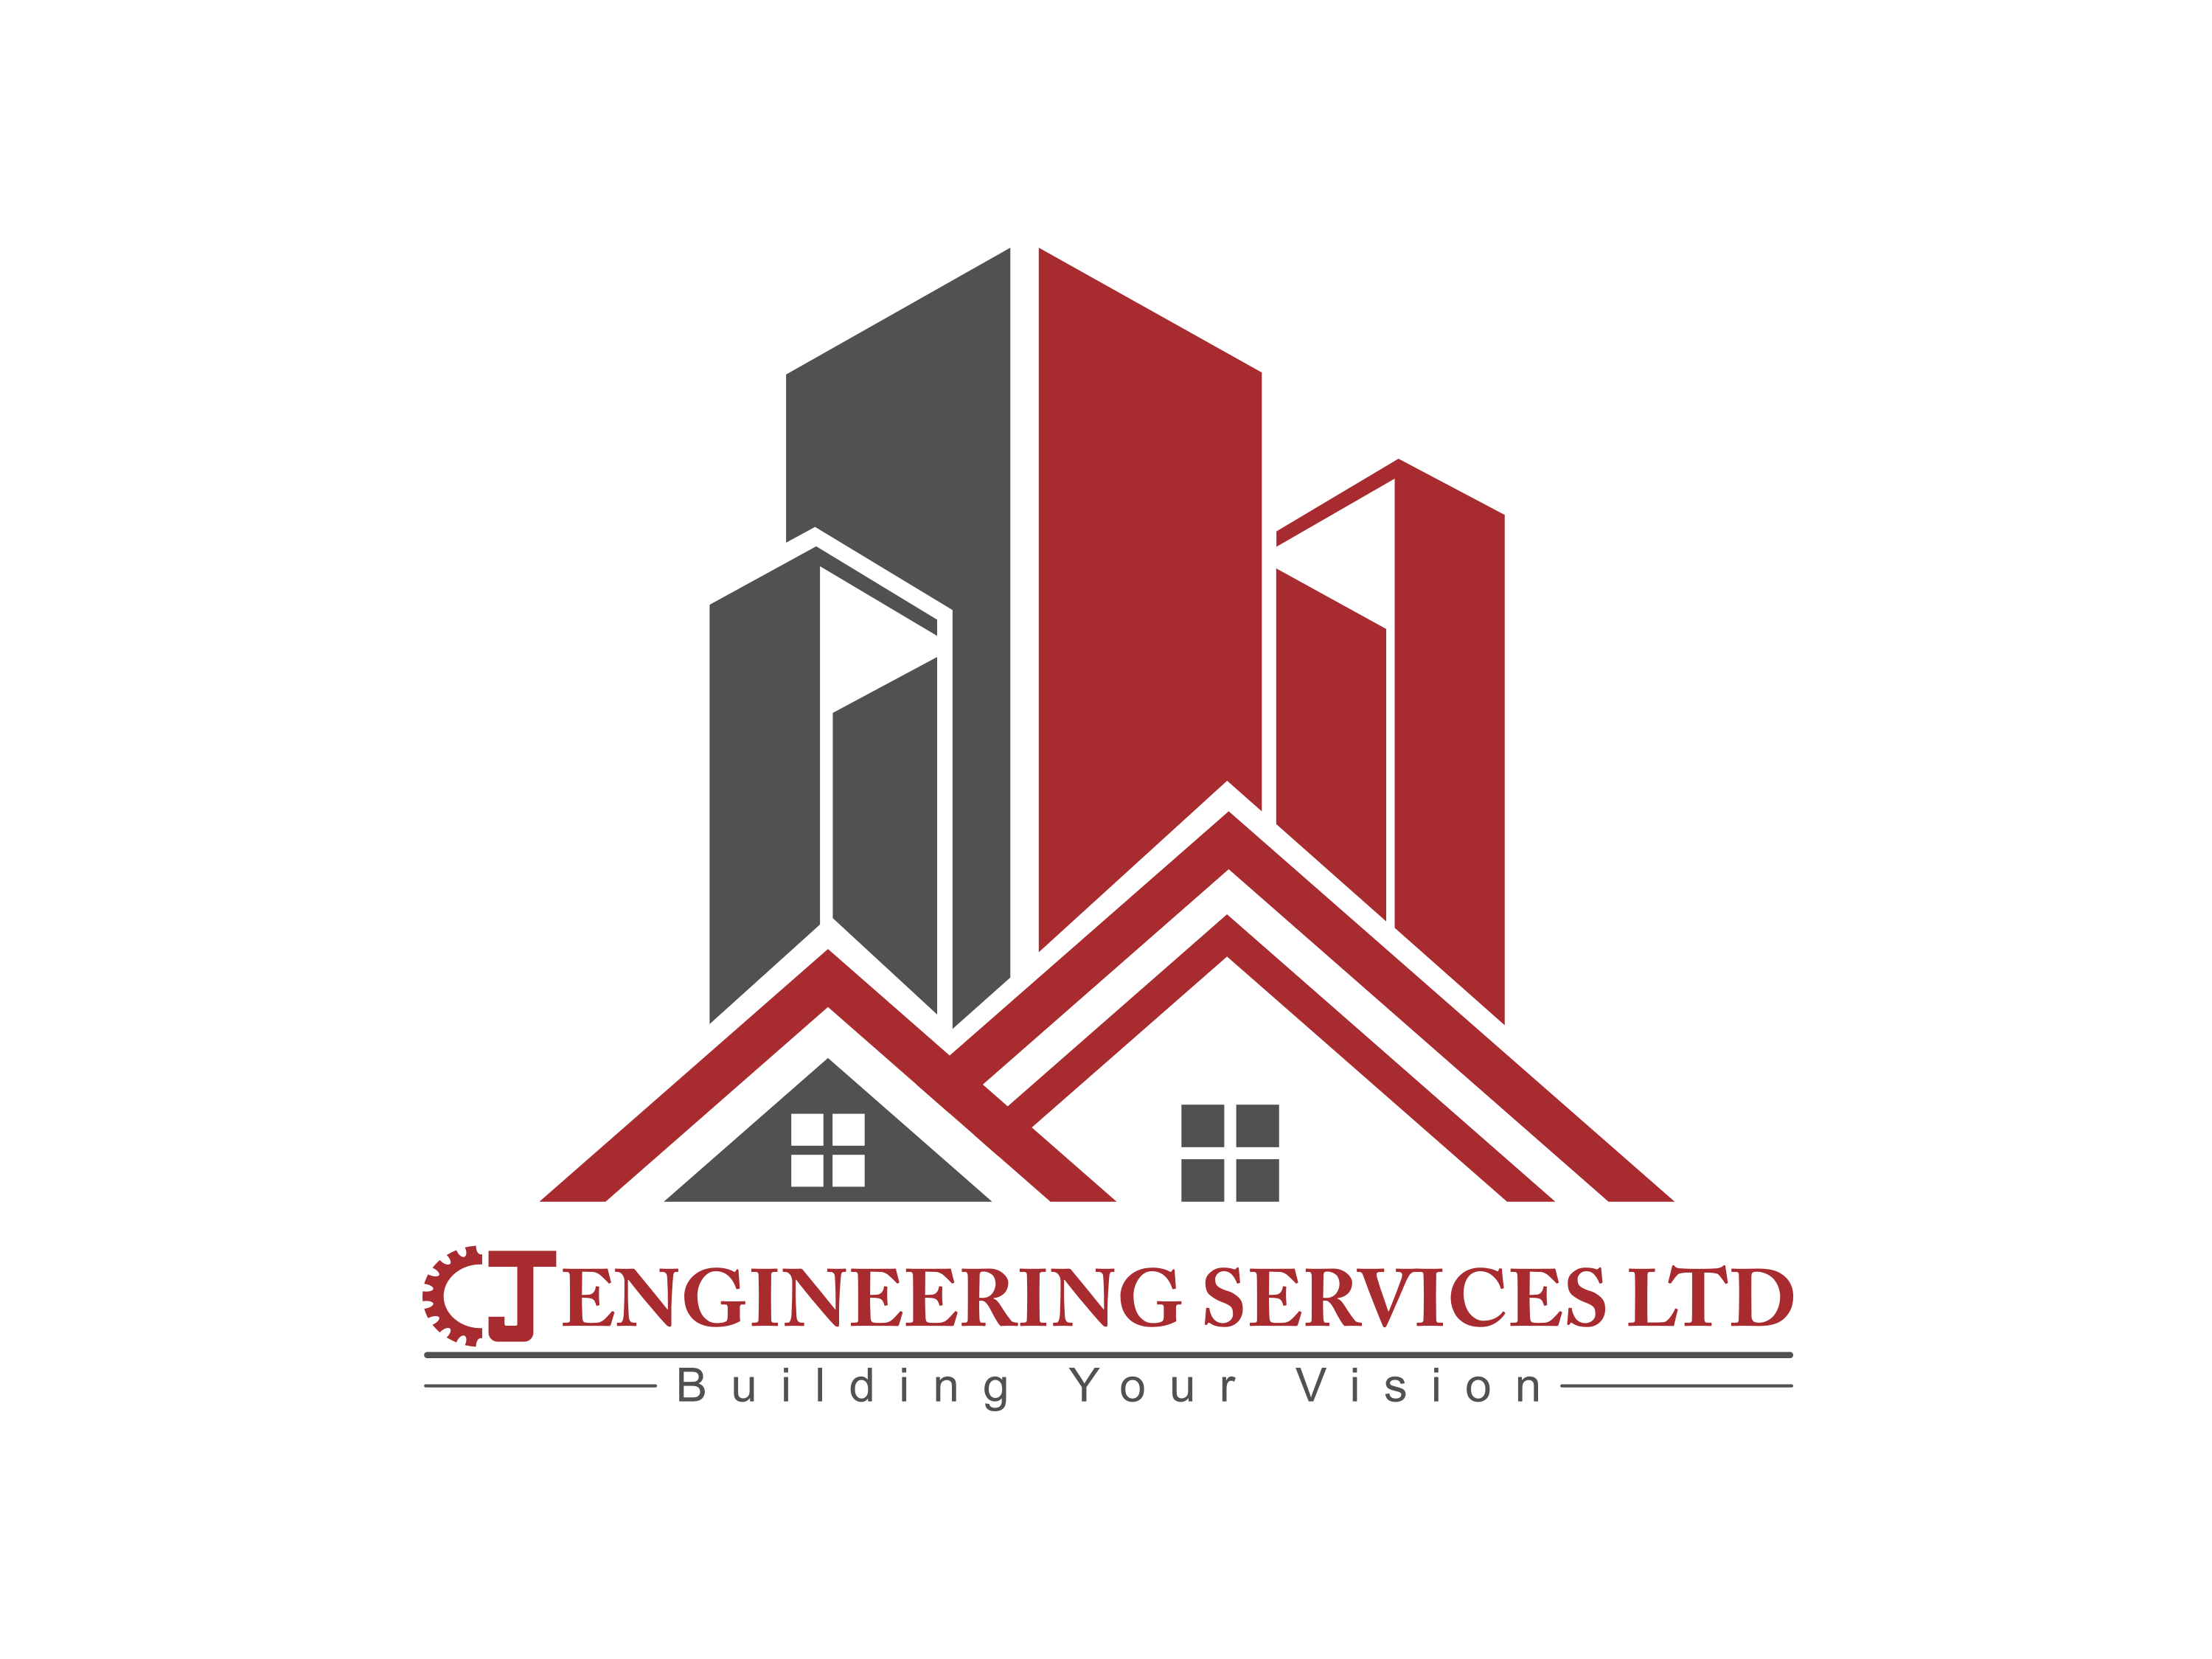 CJ Engineering Services Ltd